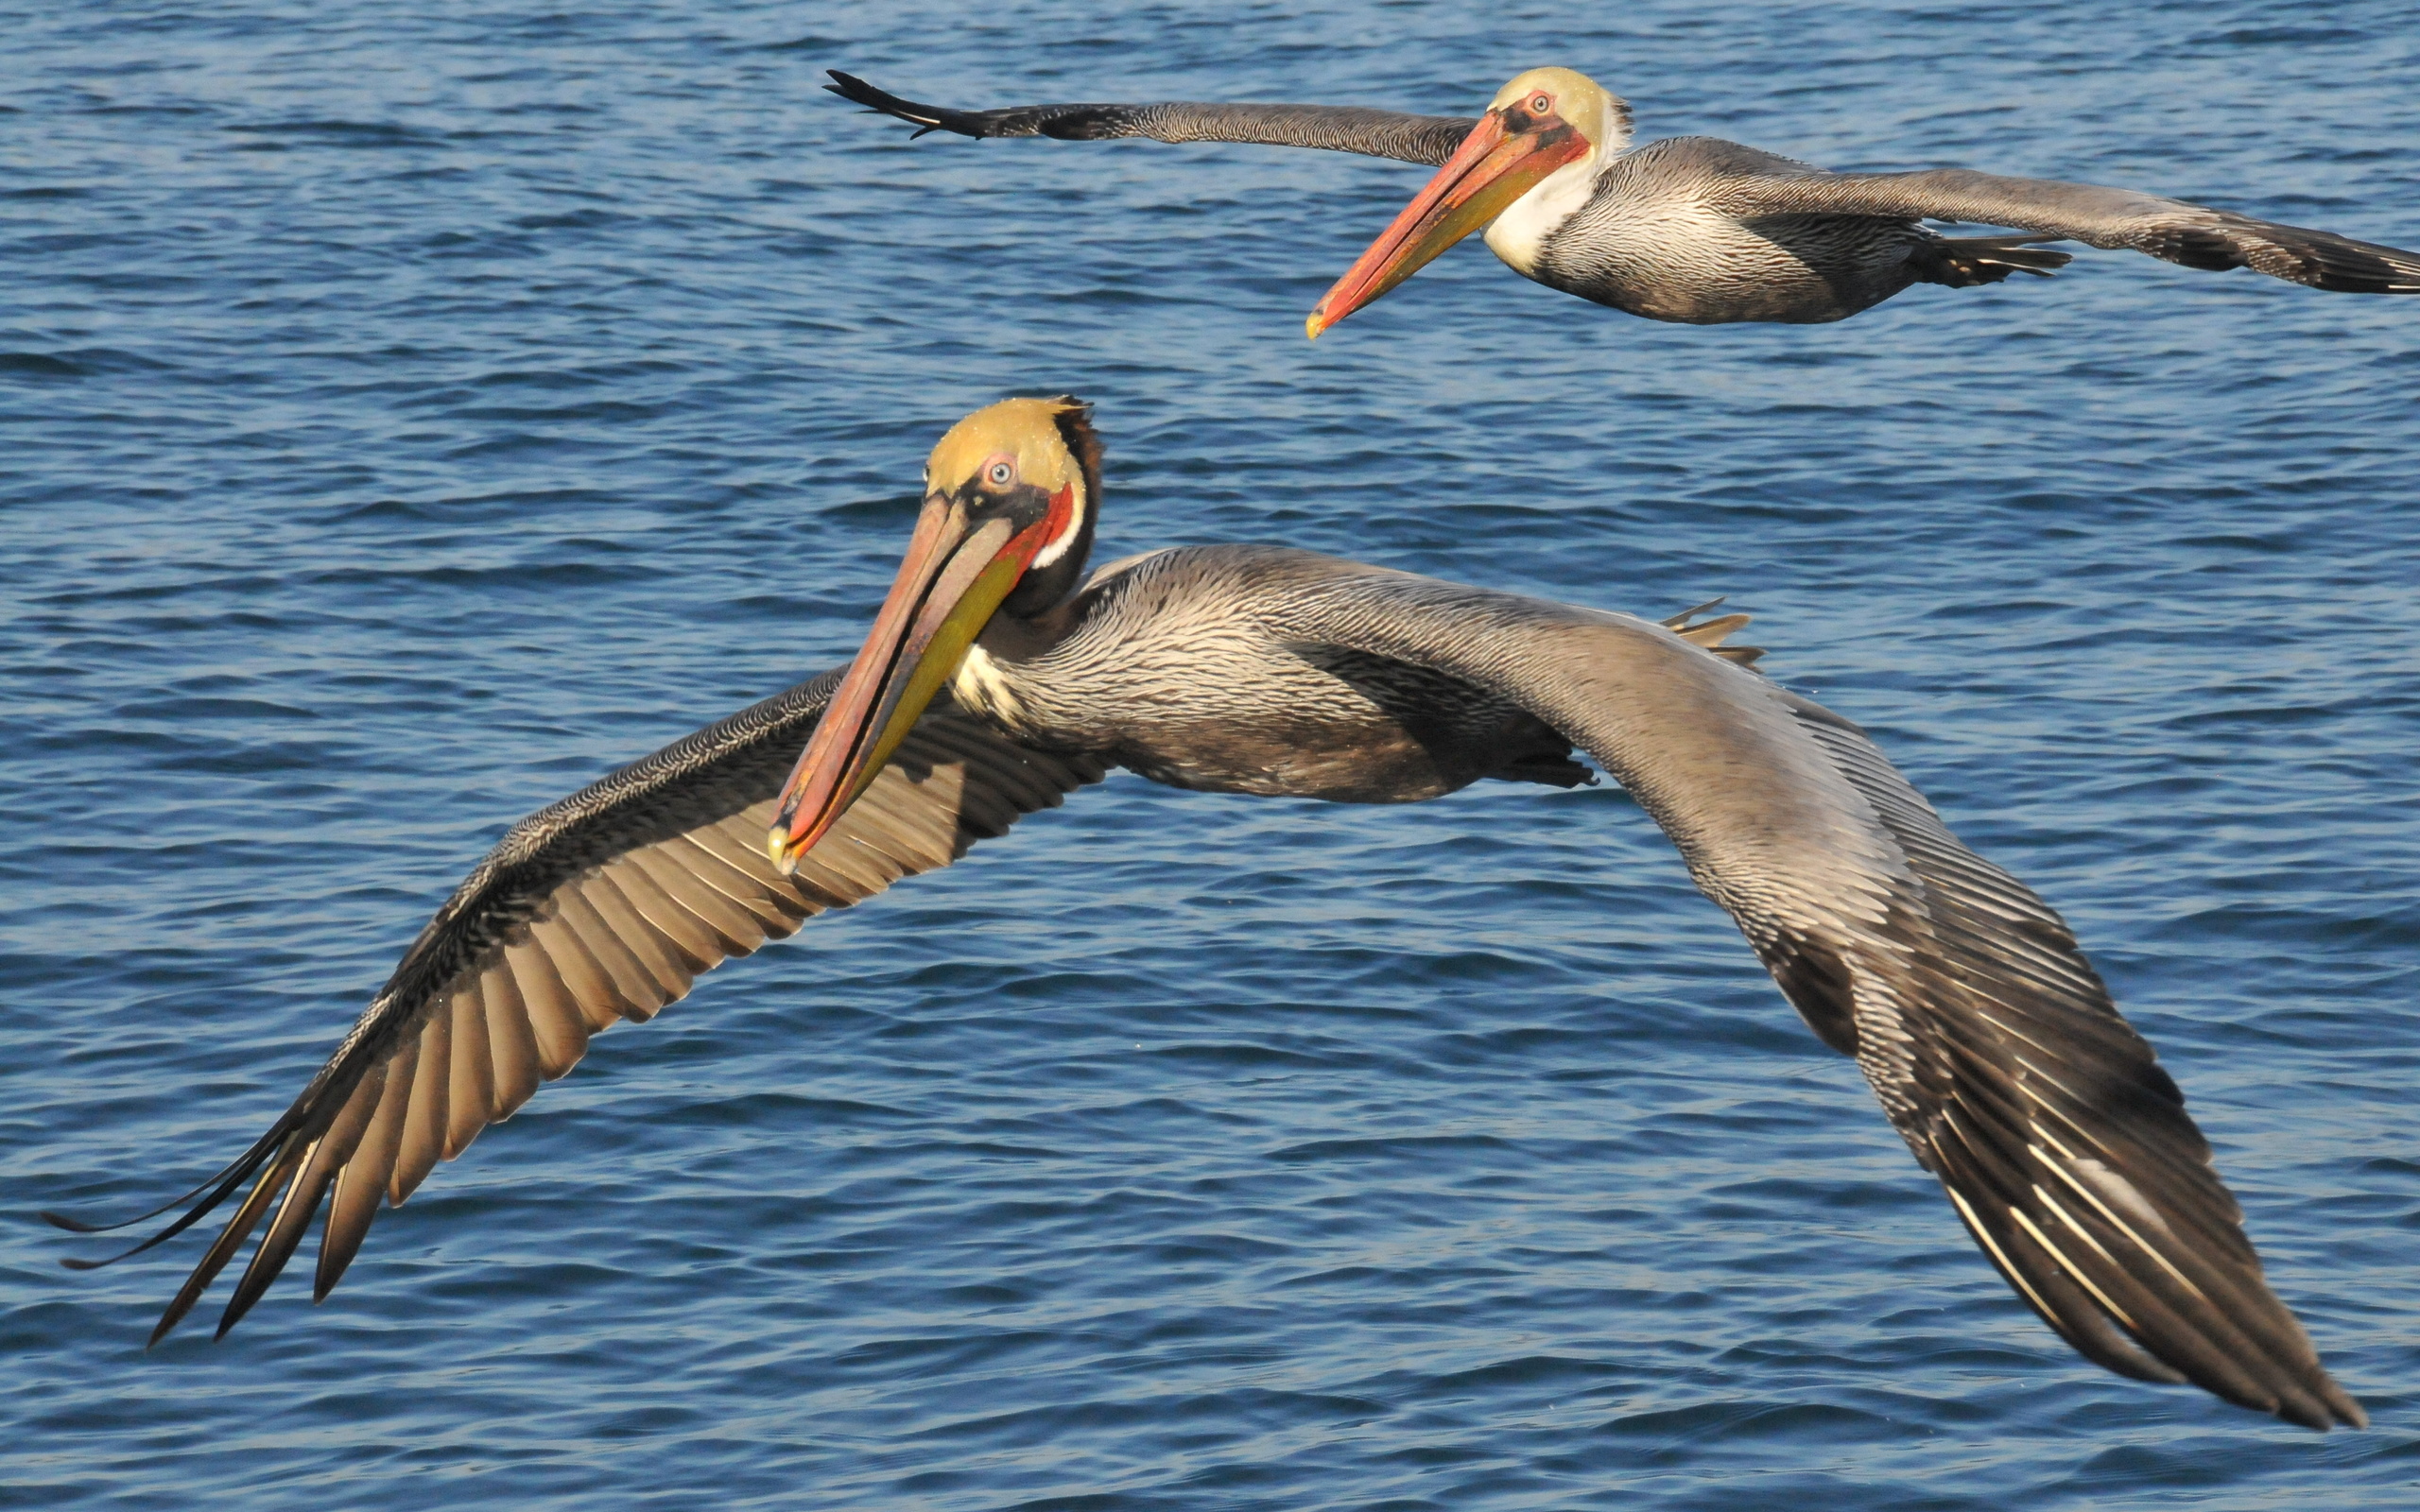 296602 Hintergrundbild herunterladen tiere, pelikan, kalifornischer brauner pelikan, vögel - Bildschirmschoner und Bilder kostenlos